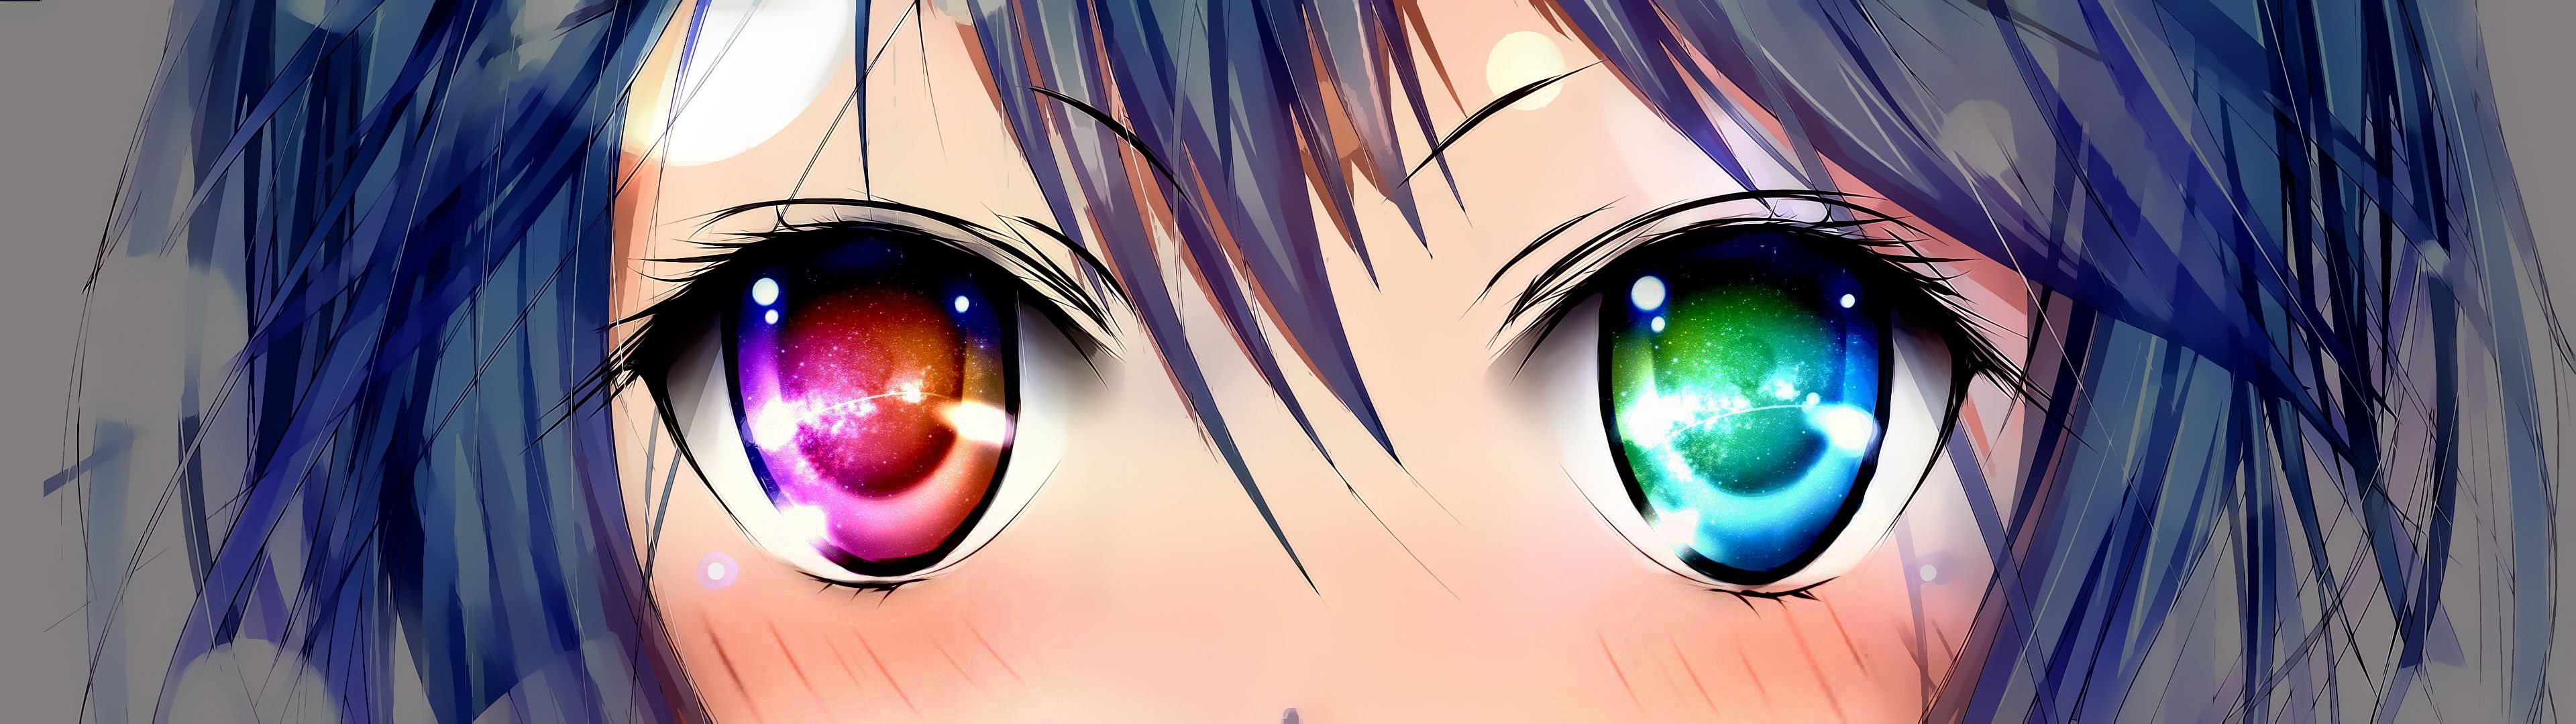 140 Anime eye wallpaper ideas  anime eyes, anime, eyes wallpaper